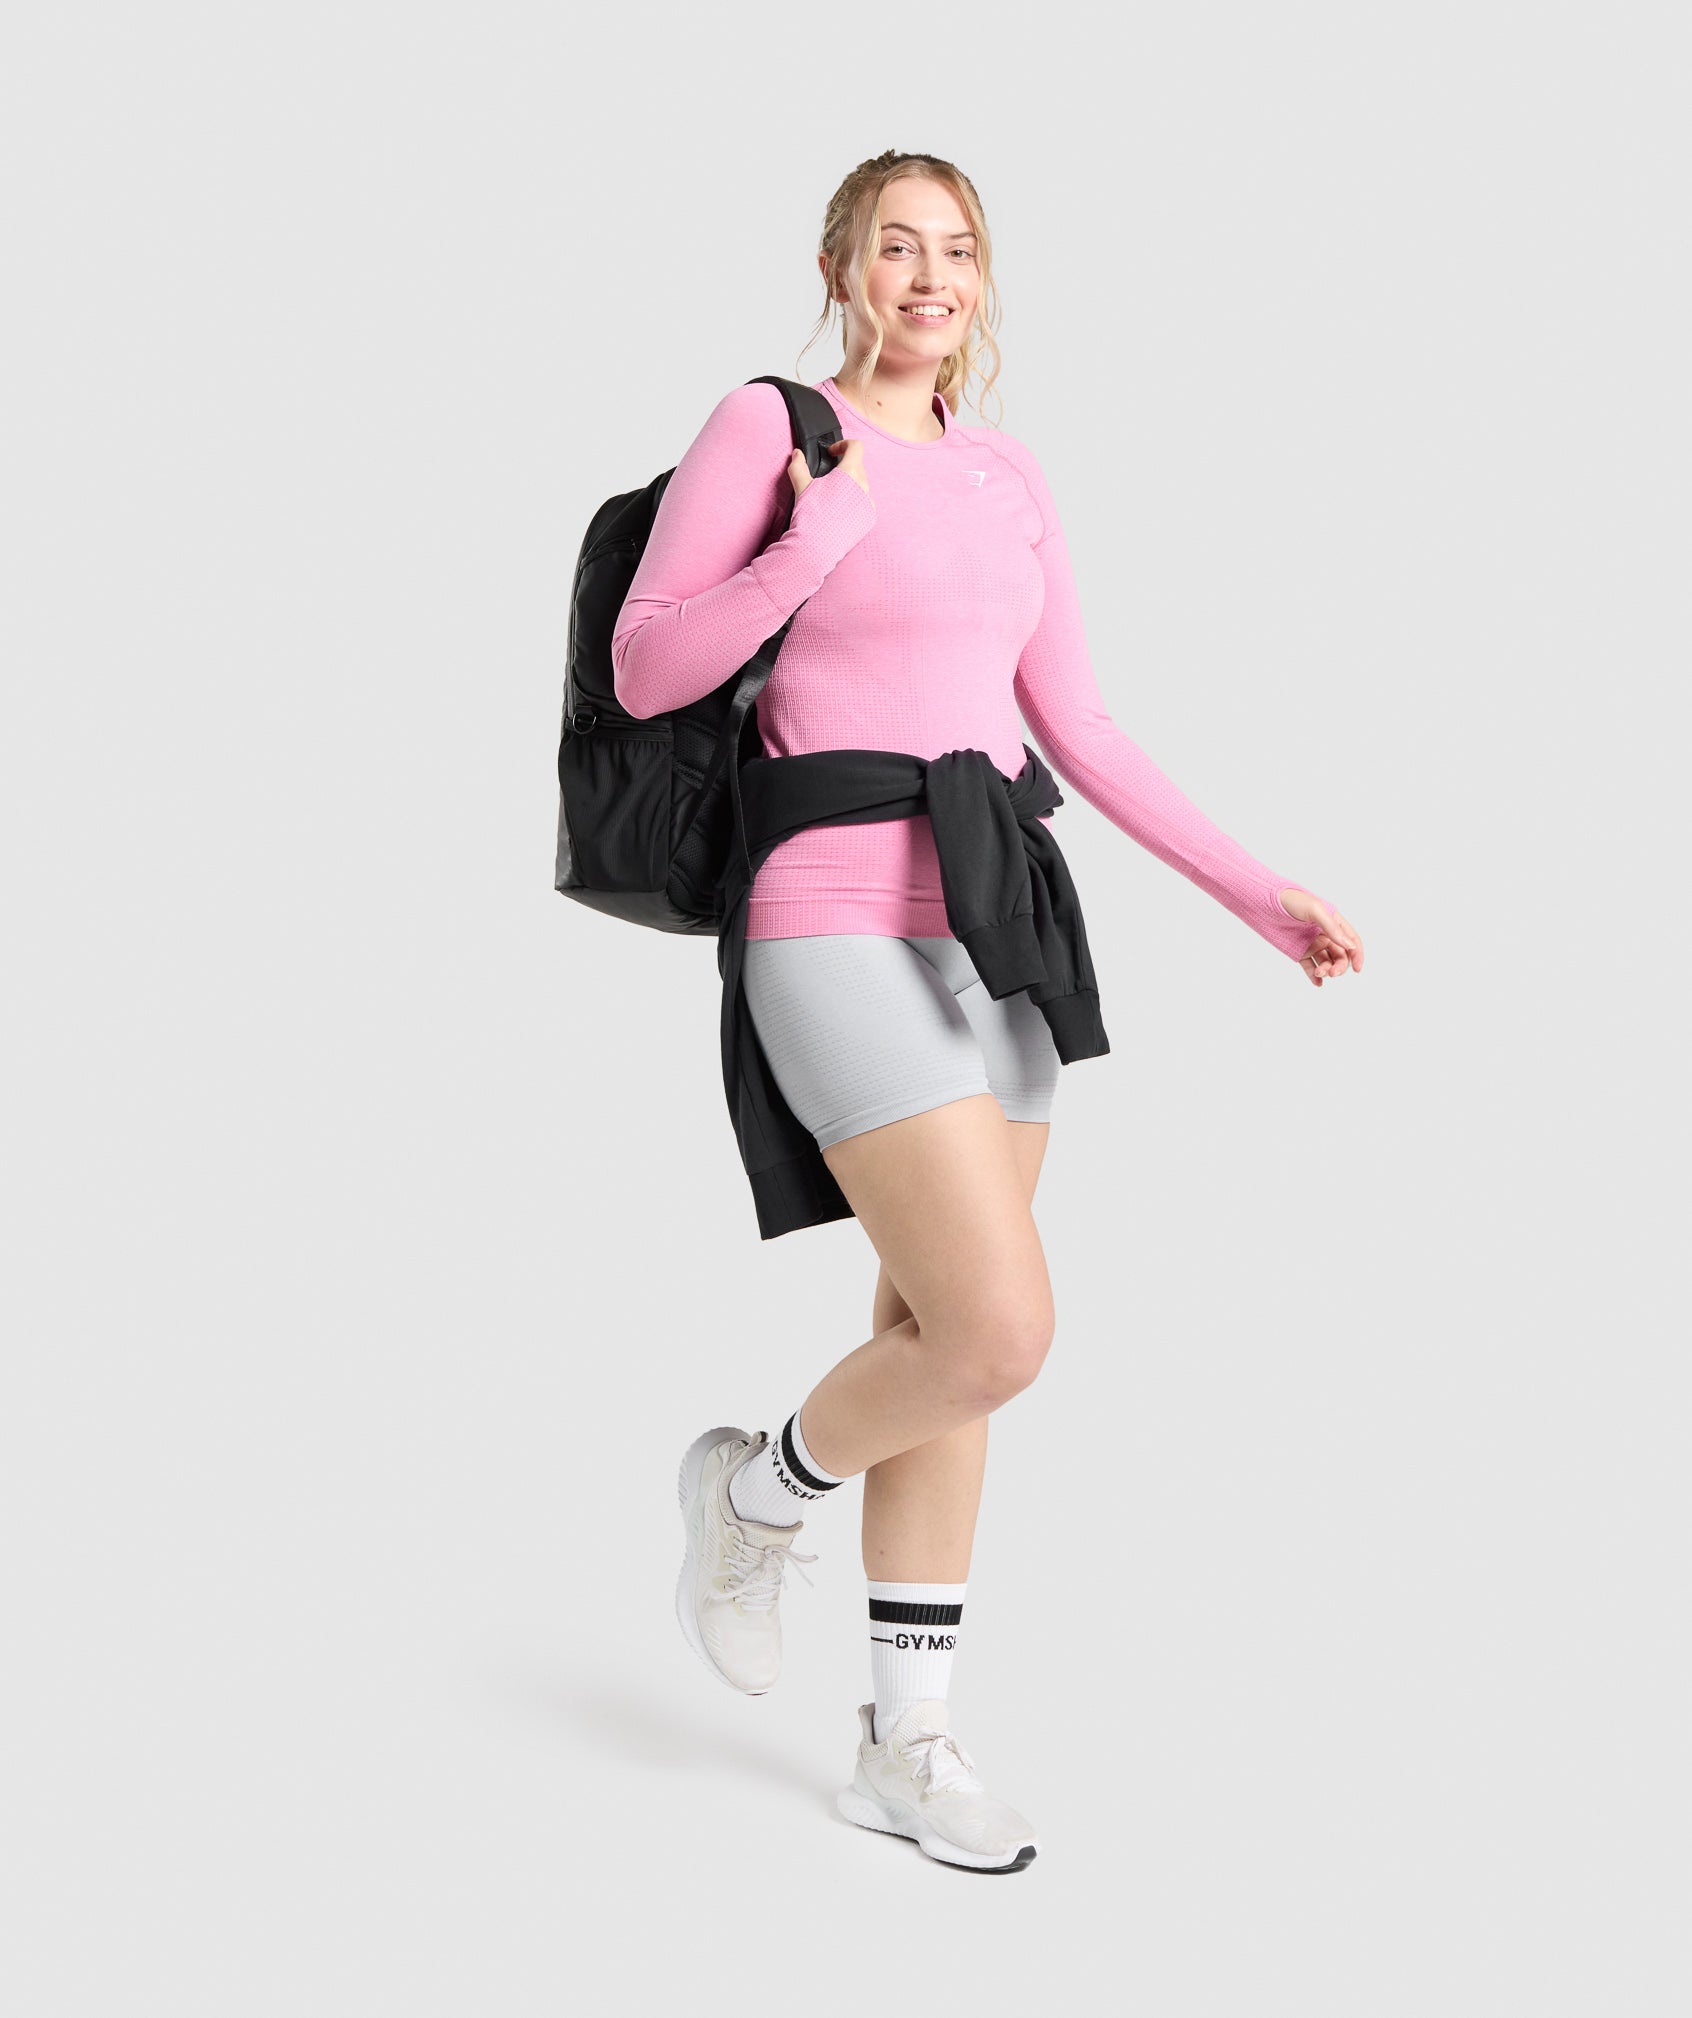 New! Gymshark Vital Seamless Leggings - Light Grey Marl women size Small :  r/gym_apparel_for_women